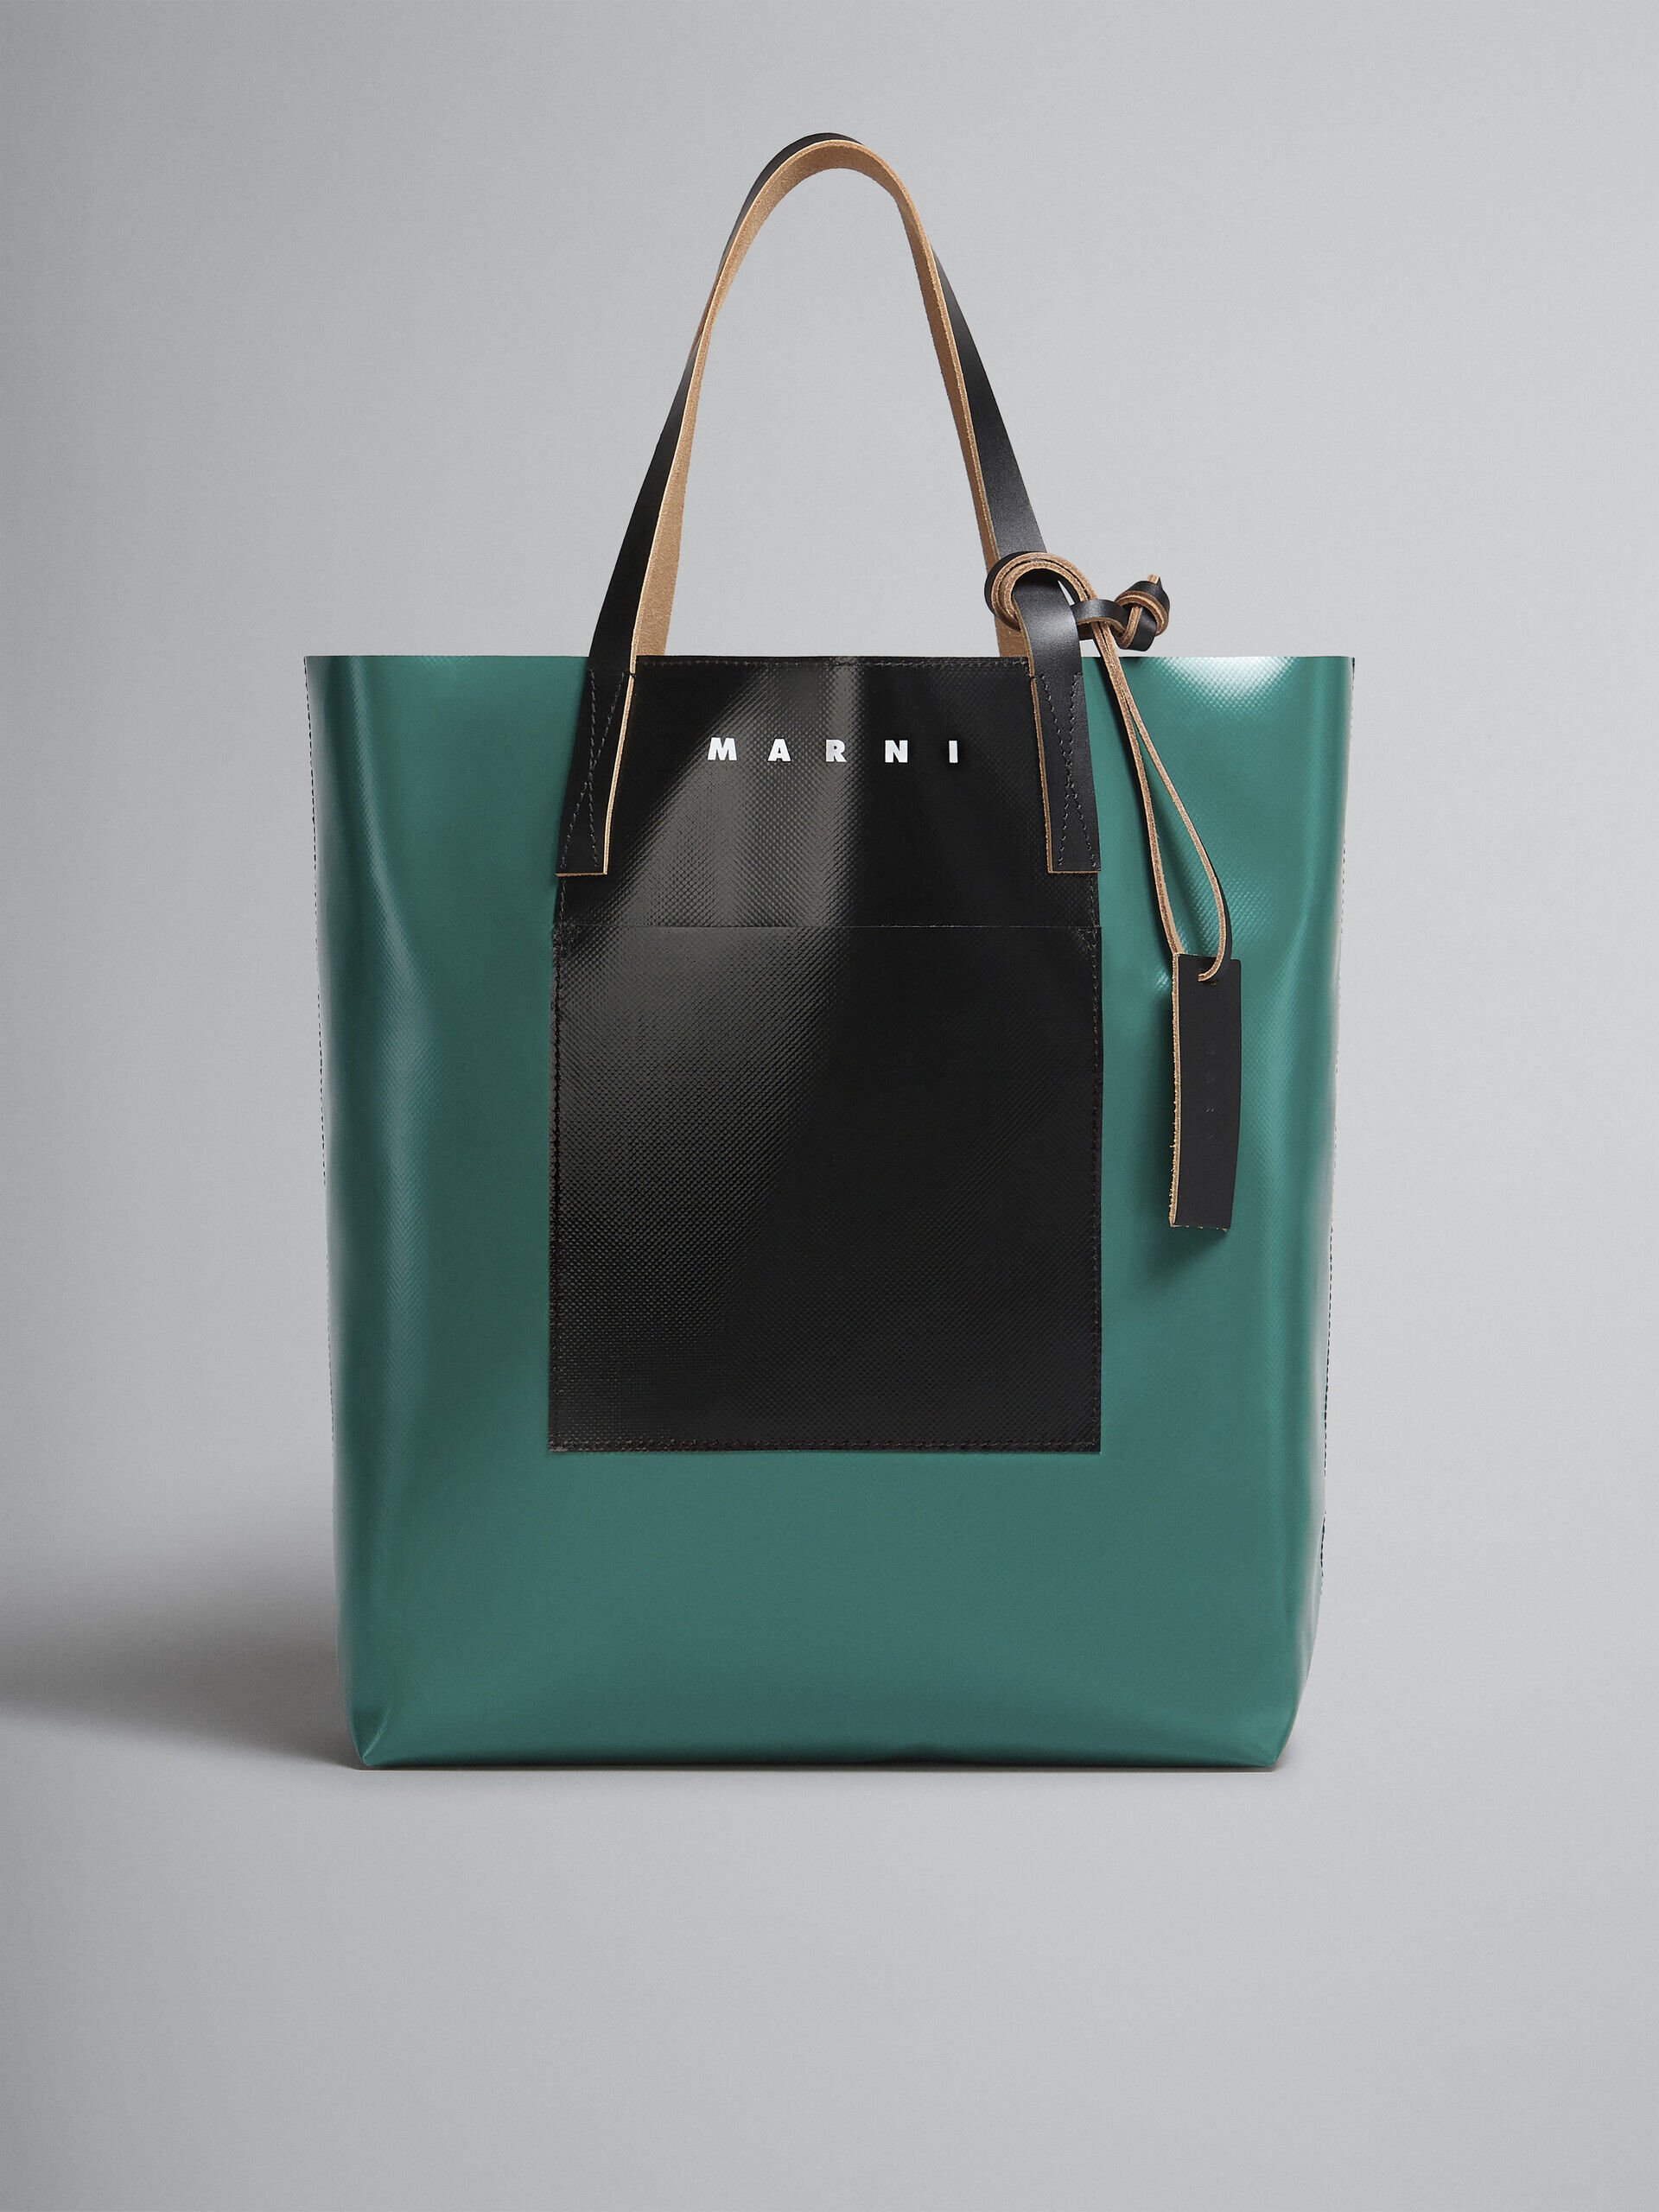 Tribeca Shopping Bag in green and black | Marni